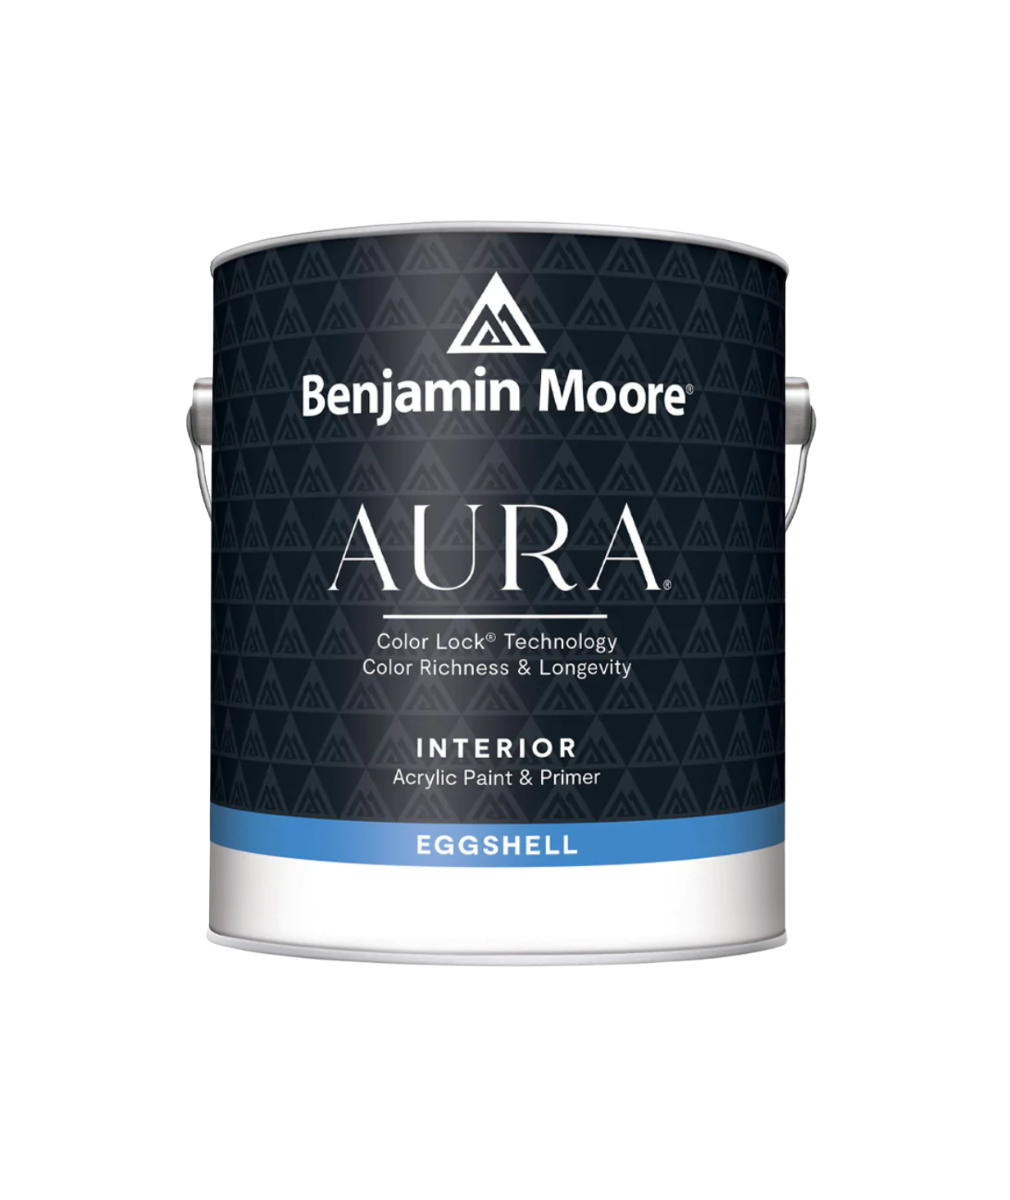 Benjamin Moore Aura® Interior Paint in a Eggshell finish at Southwestern Paint Houston, TX.